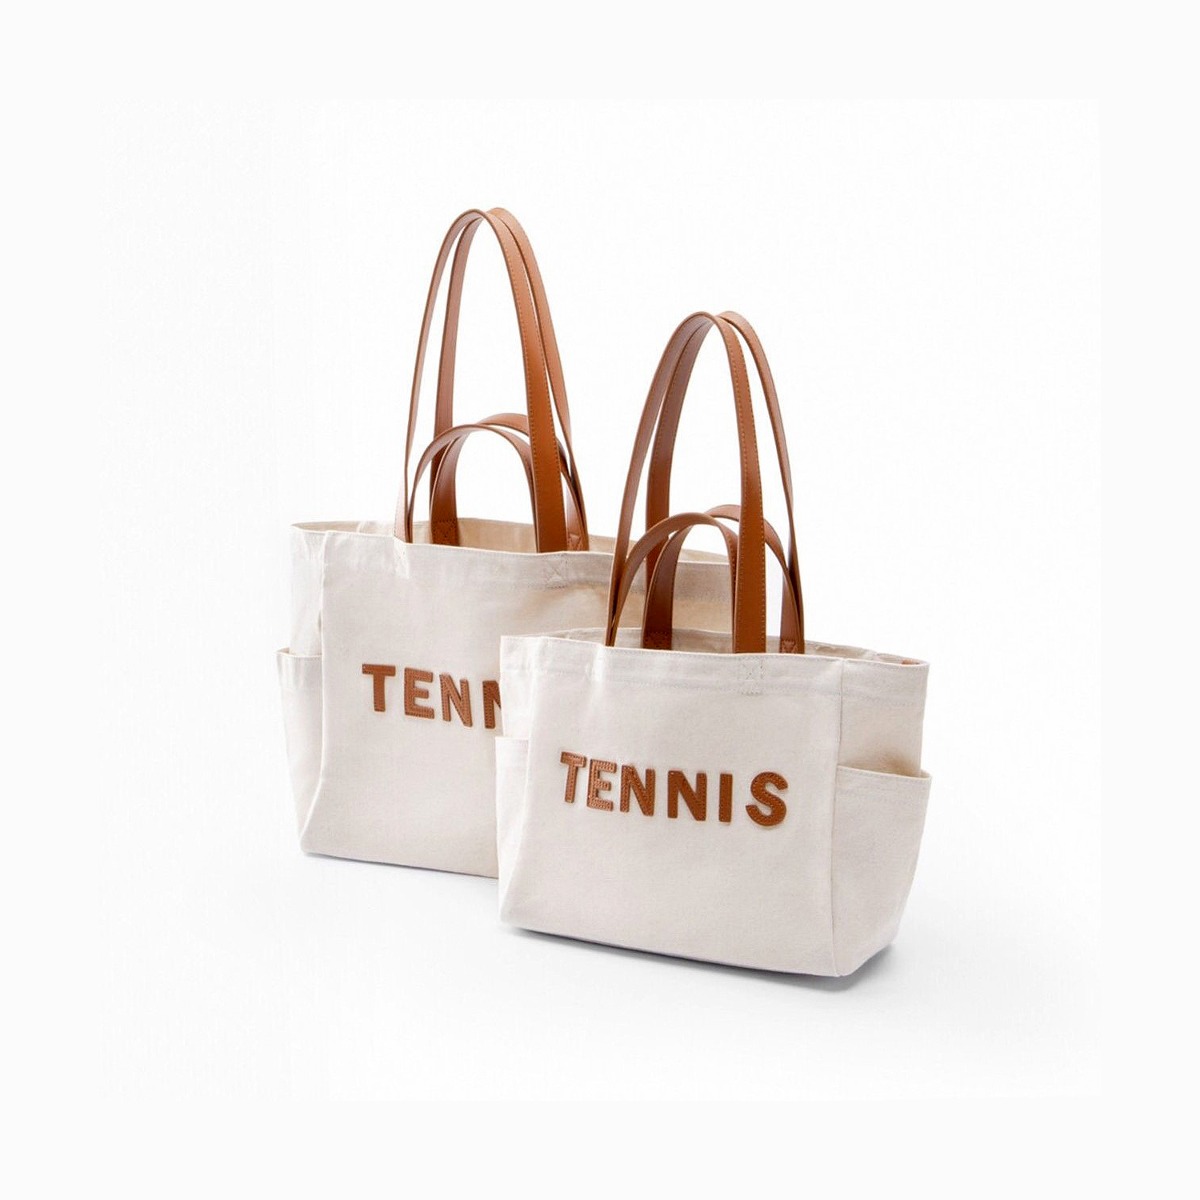 Tennis Eco Bag Cotton Canvas Bags 2 Types